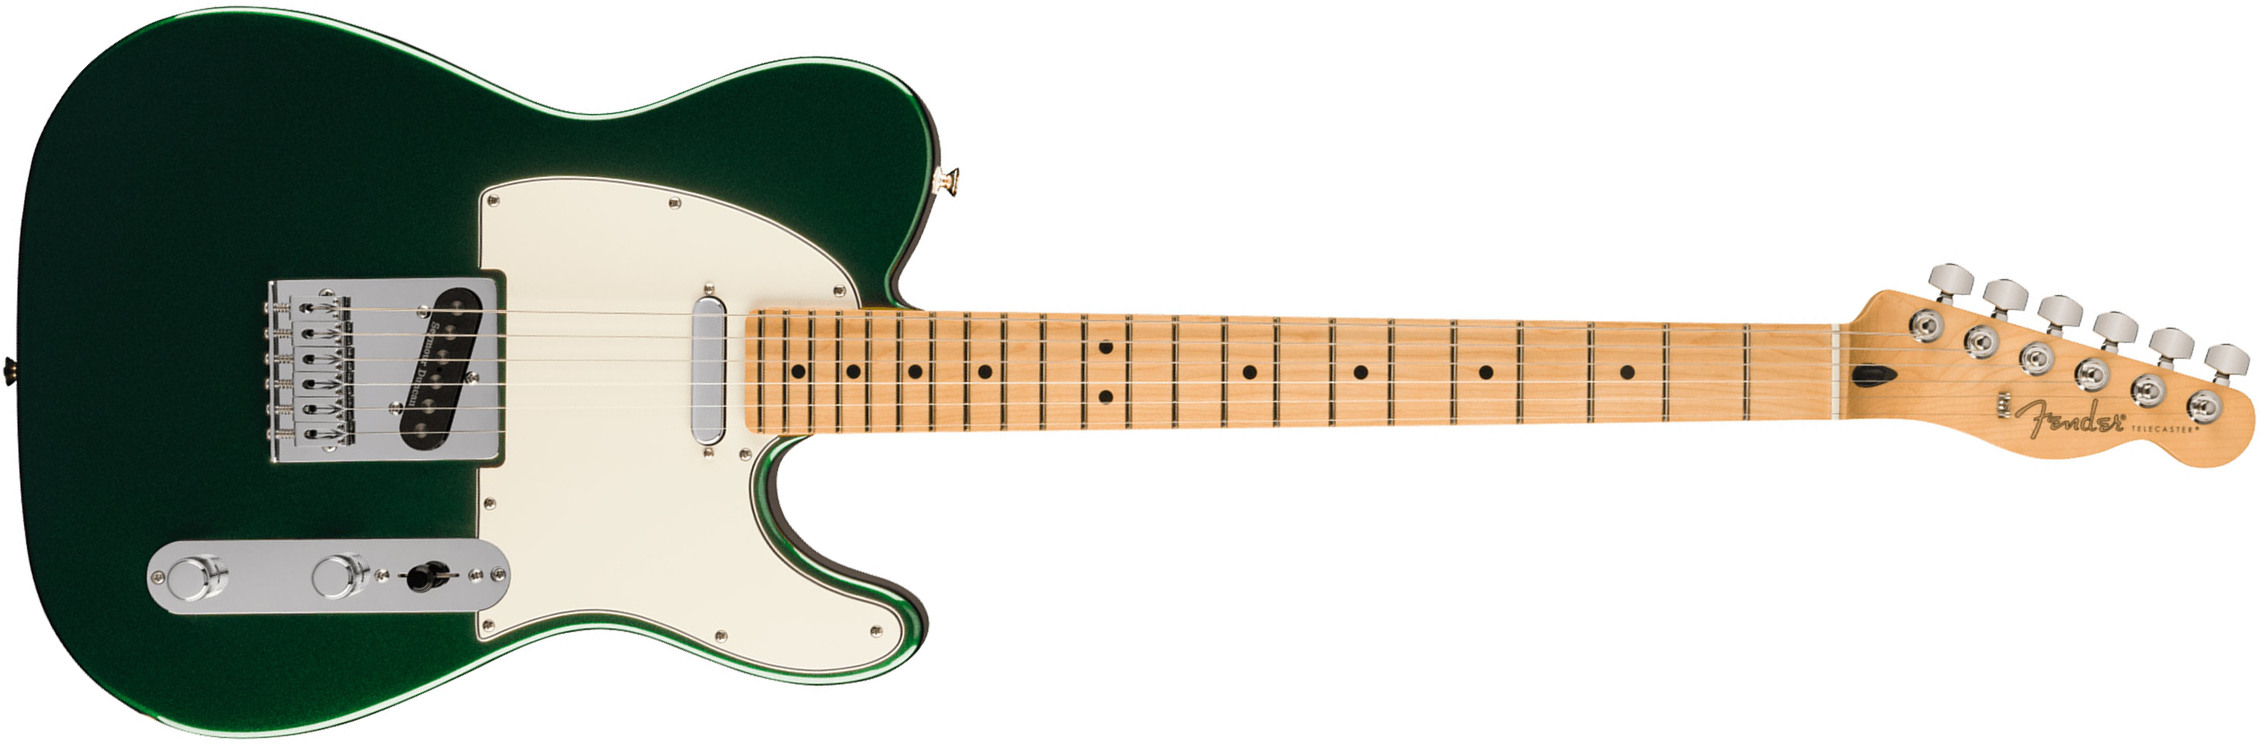 Fender Tele Player Ltd Mex 2s Seymour Duncan Mn - British Racing Green - Guitare Électrique Forme Tel - Main picture